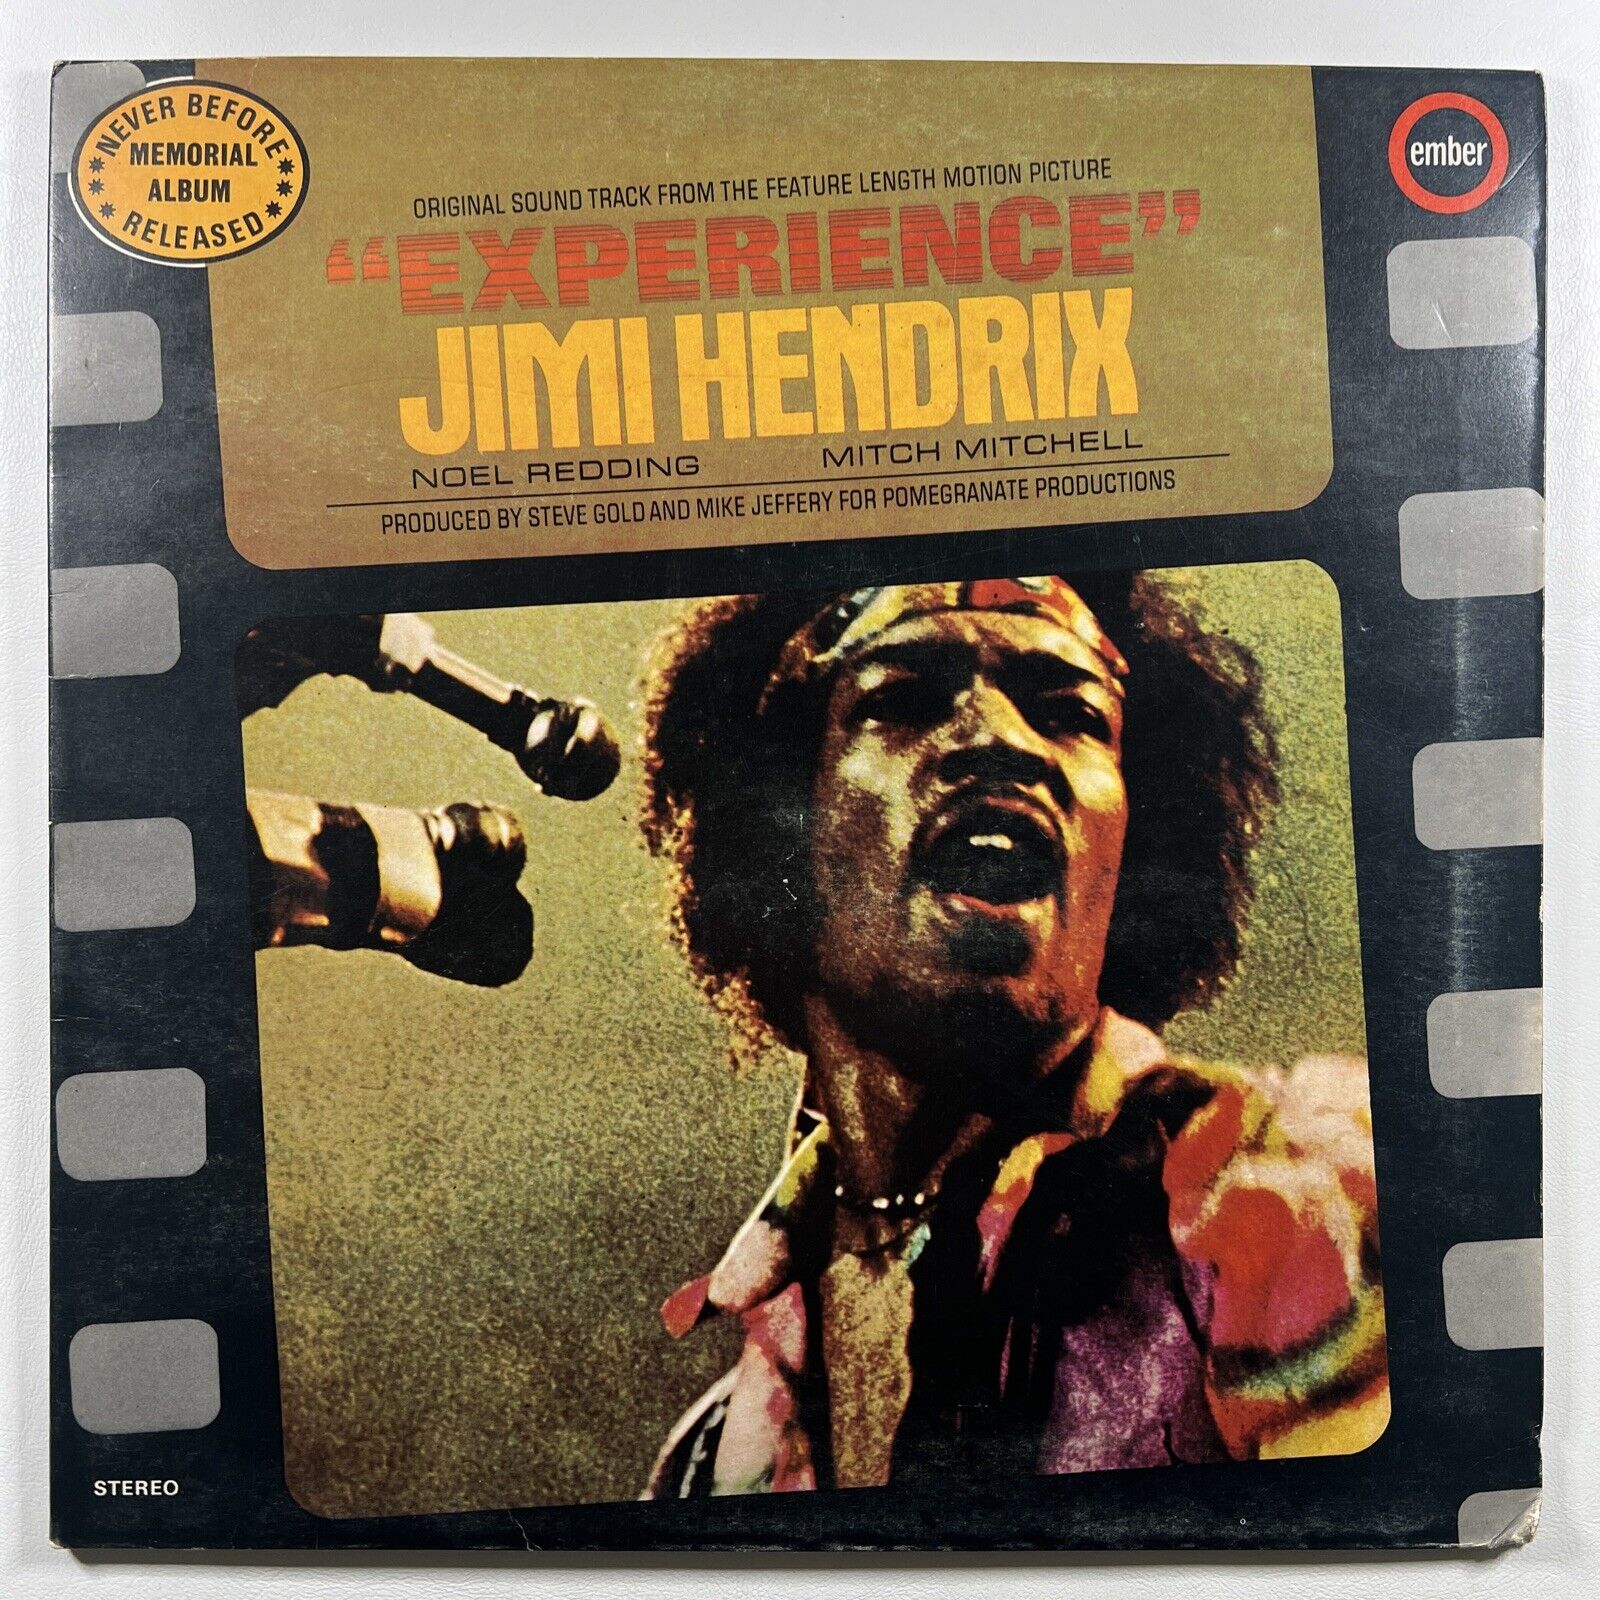 Jimi Hendrix “Original Sound Track Experience” LP/Ember NR5057 1971 UK Gate